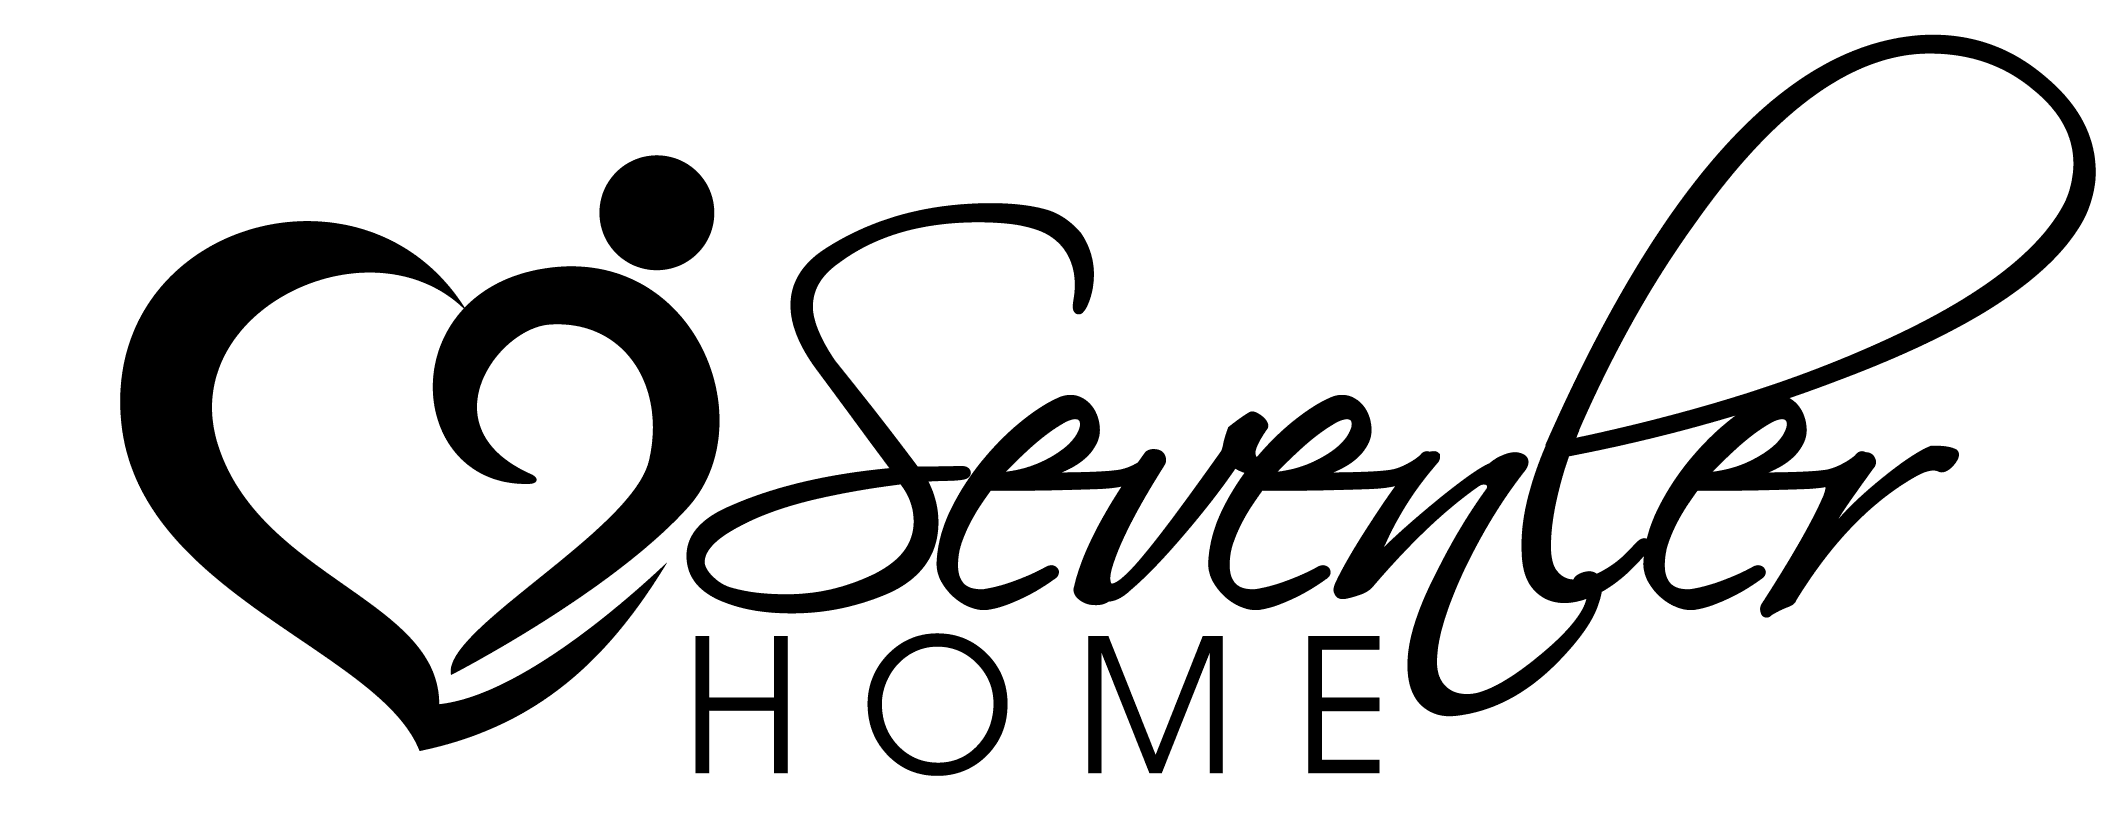 Sevenler Home Partnerprogramm